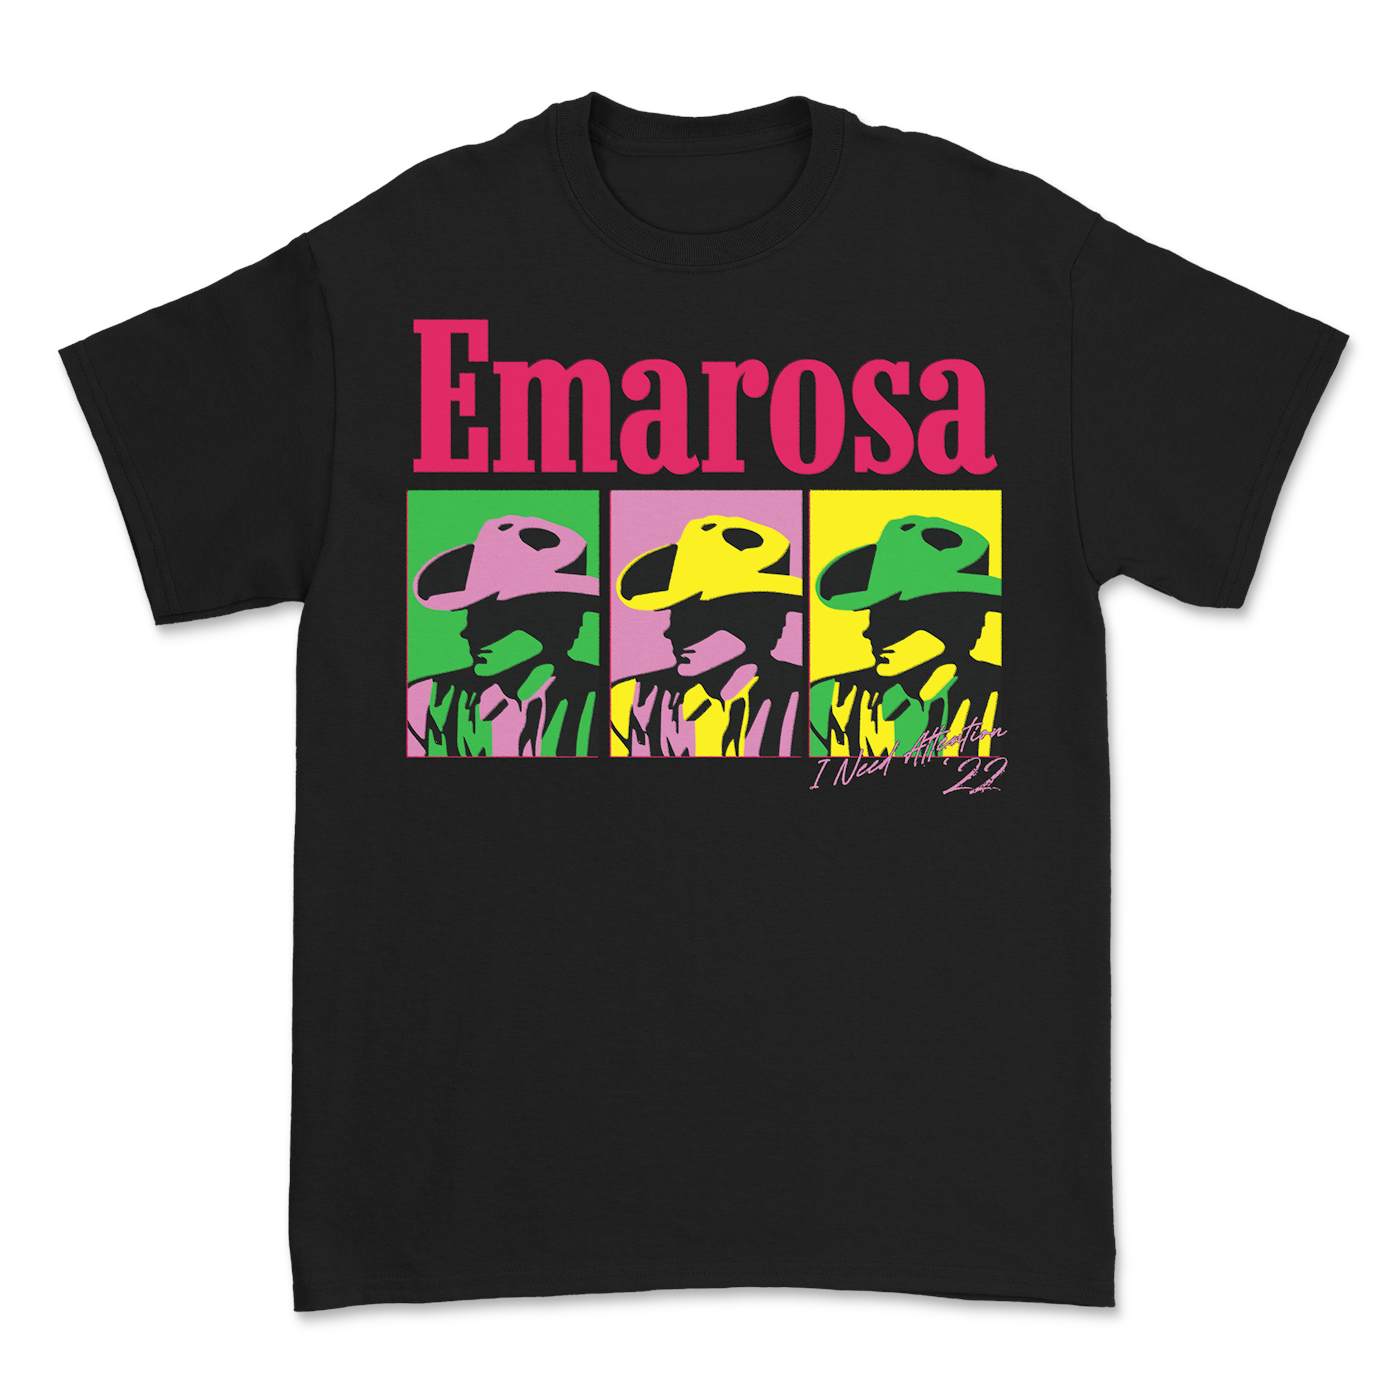 Emarosa - Cowboy T-Shirt (Black)